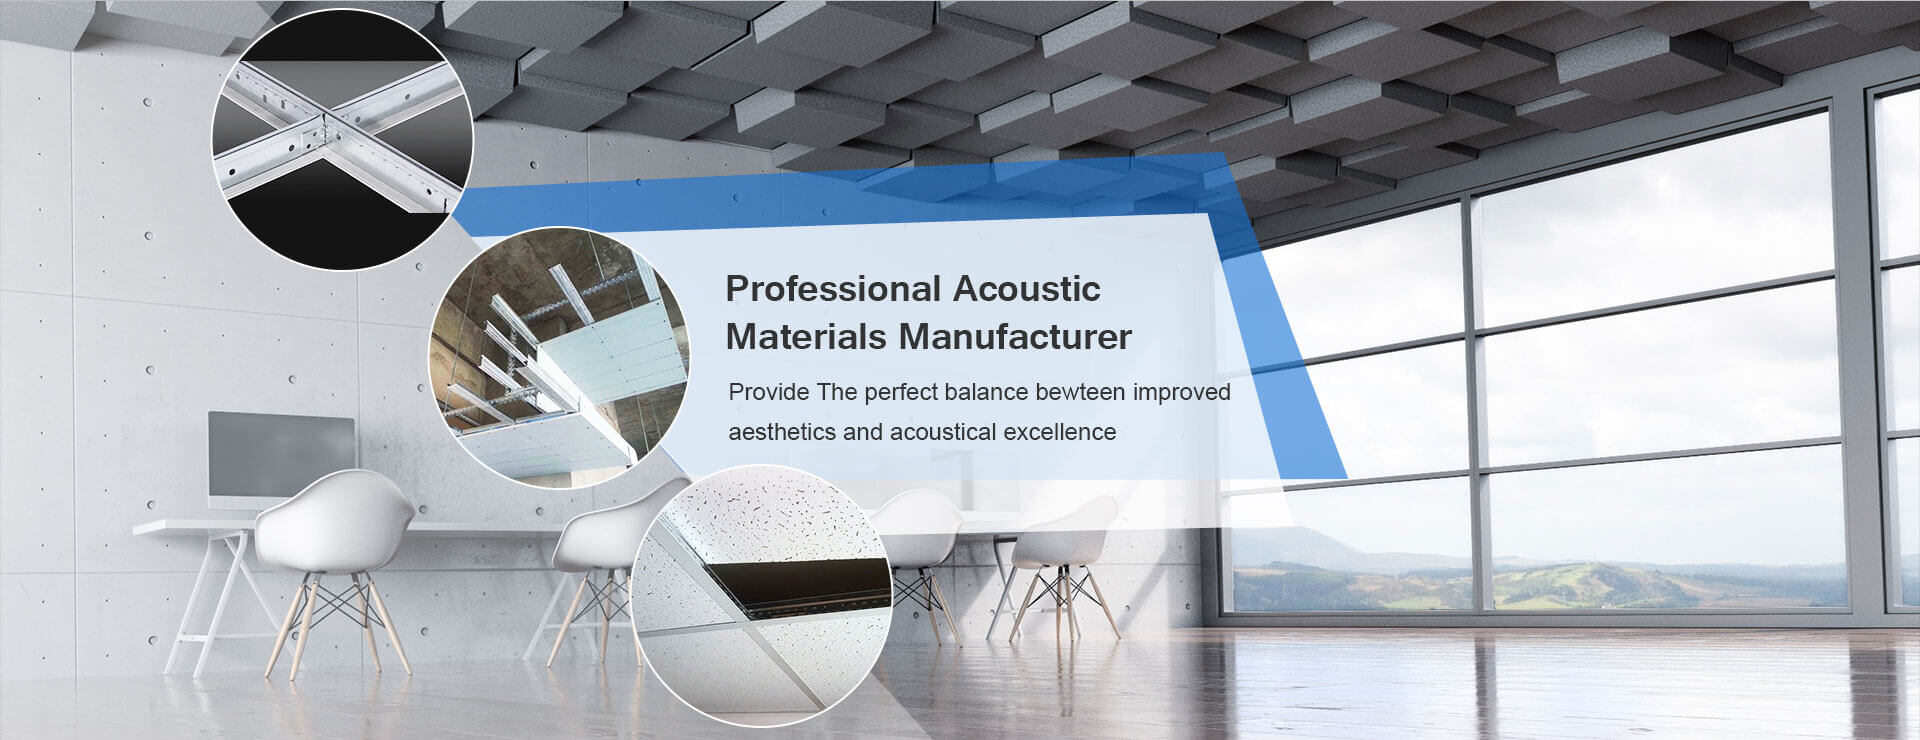 Professional Acoustic Materials Manufacturer